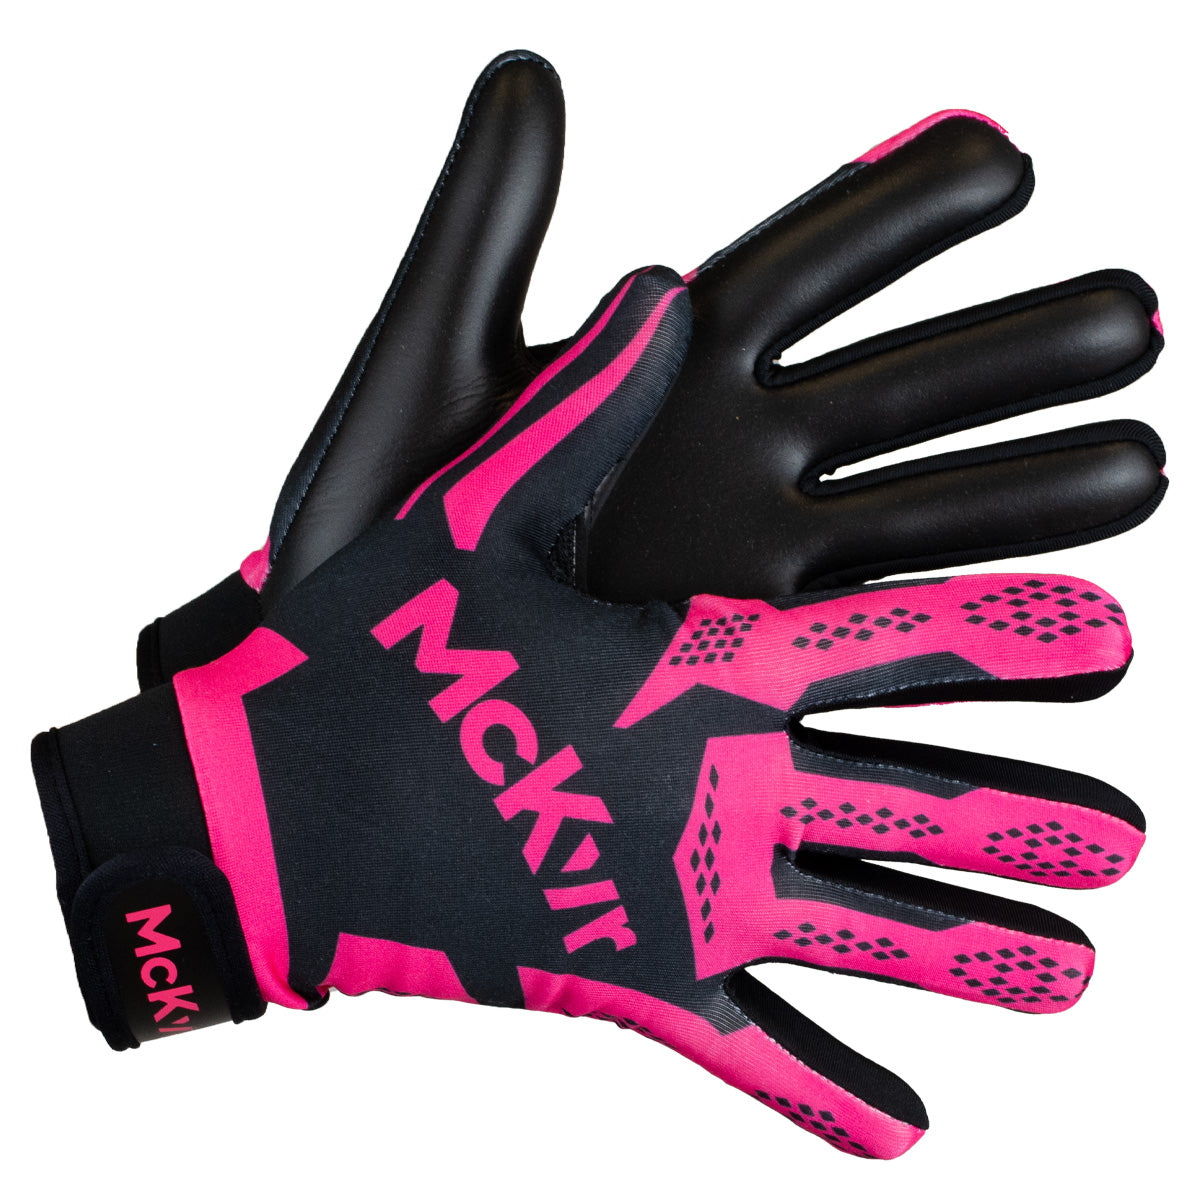 Mc Keever 2.0 Gaelic Gloves - Adult - Black/Pink